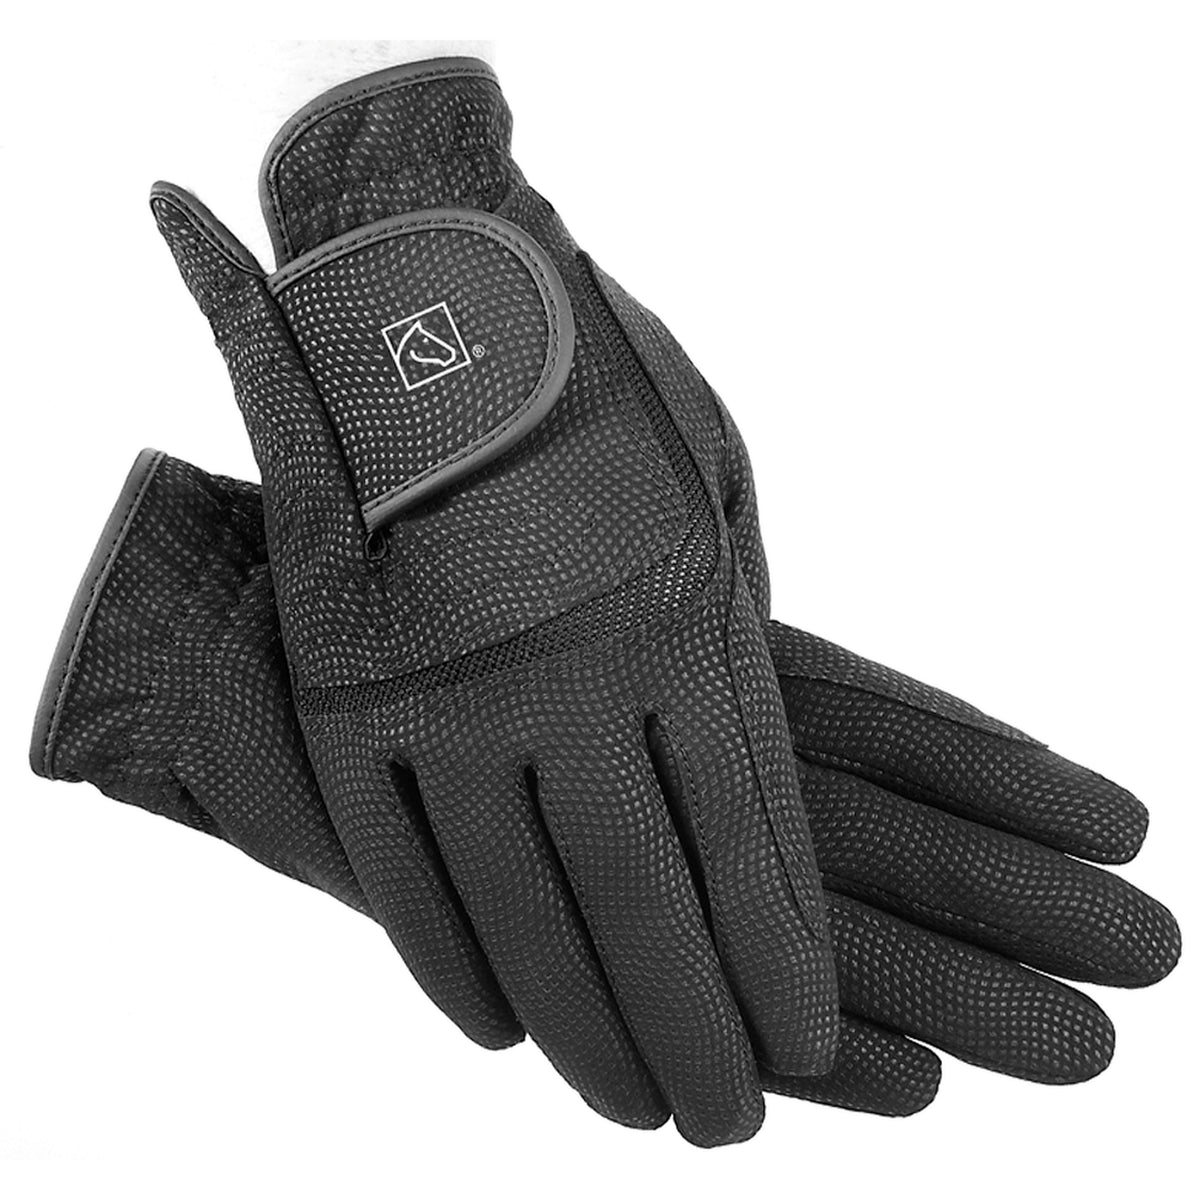 SSG Digital Grippy Riding Gloves